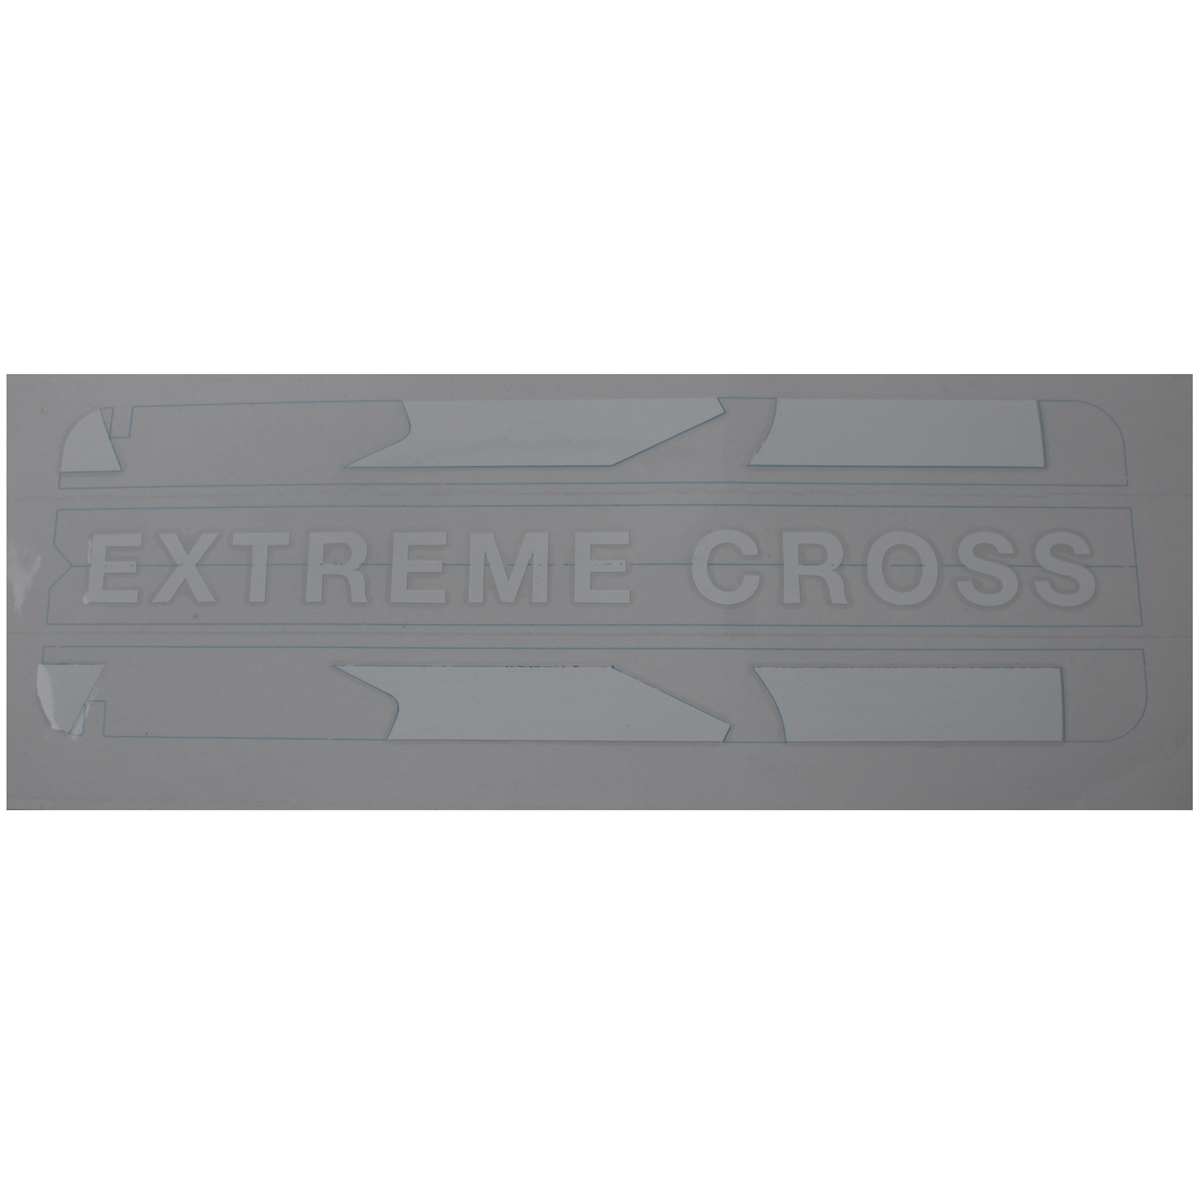 Batteriedeckelaufkleber Extreme Cross weiß